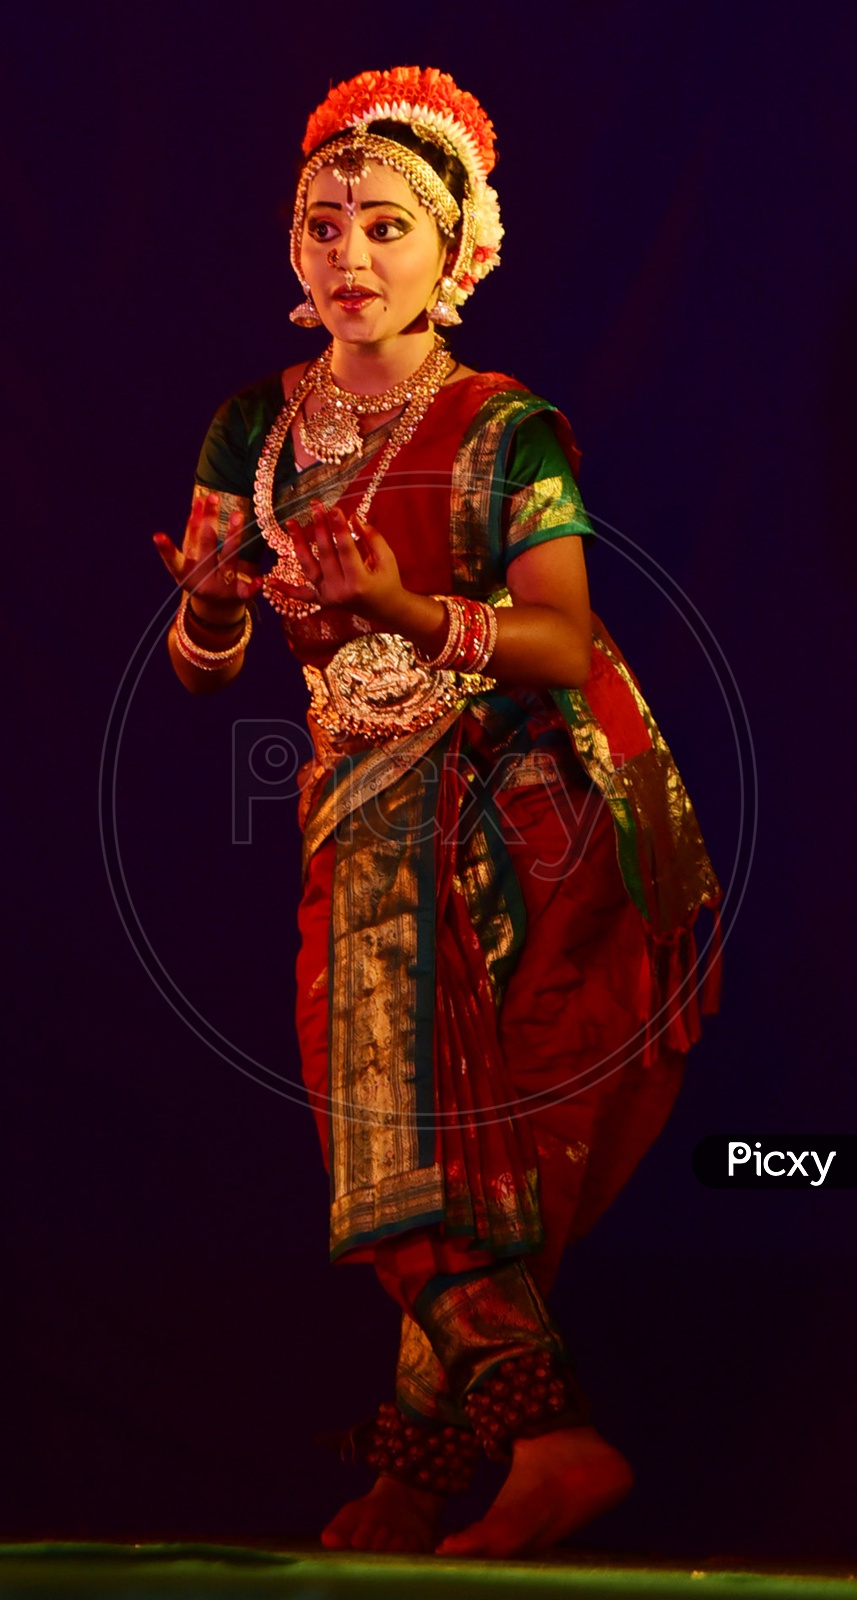 bharatanatyam dancer performing on stage